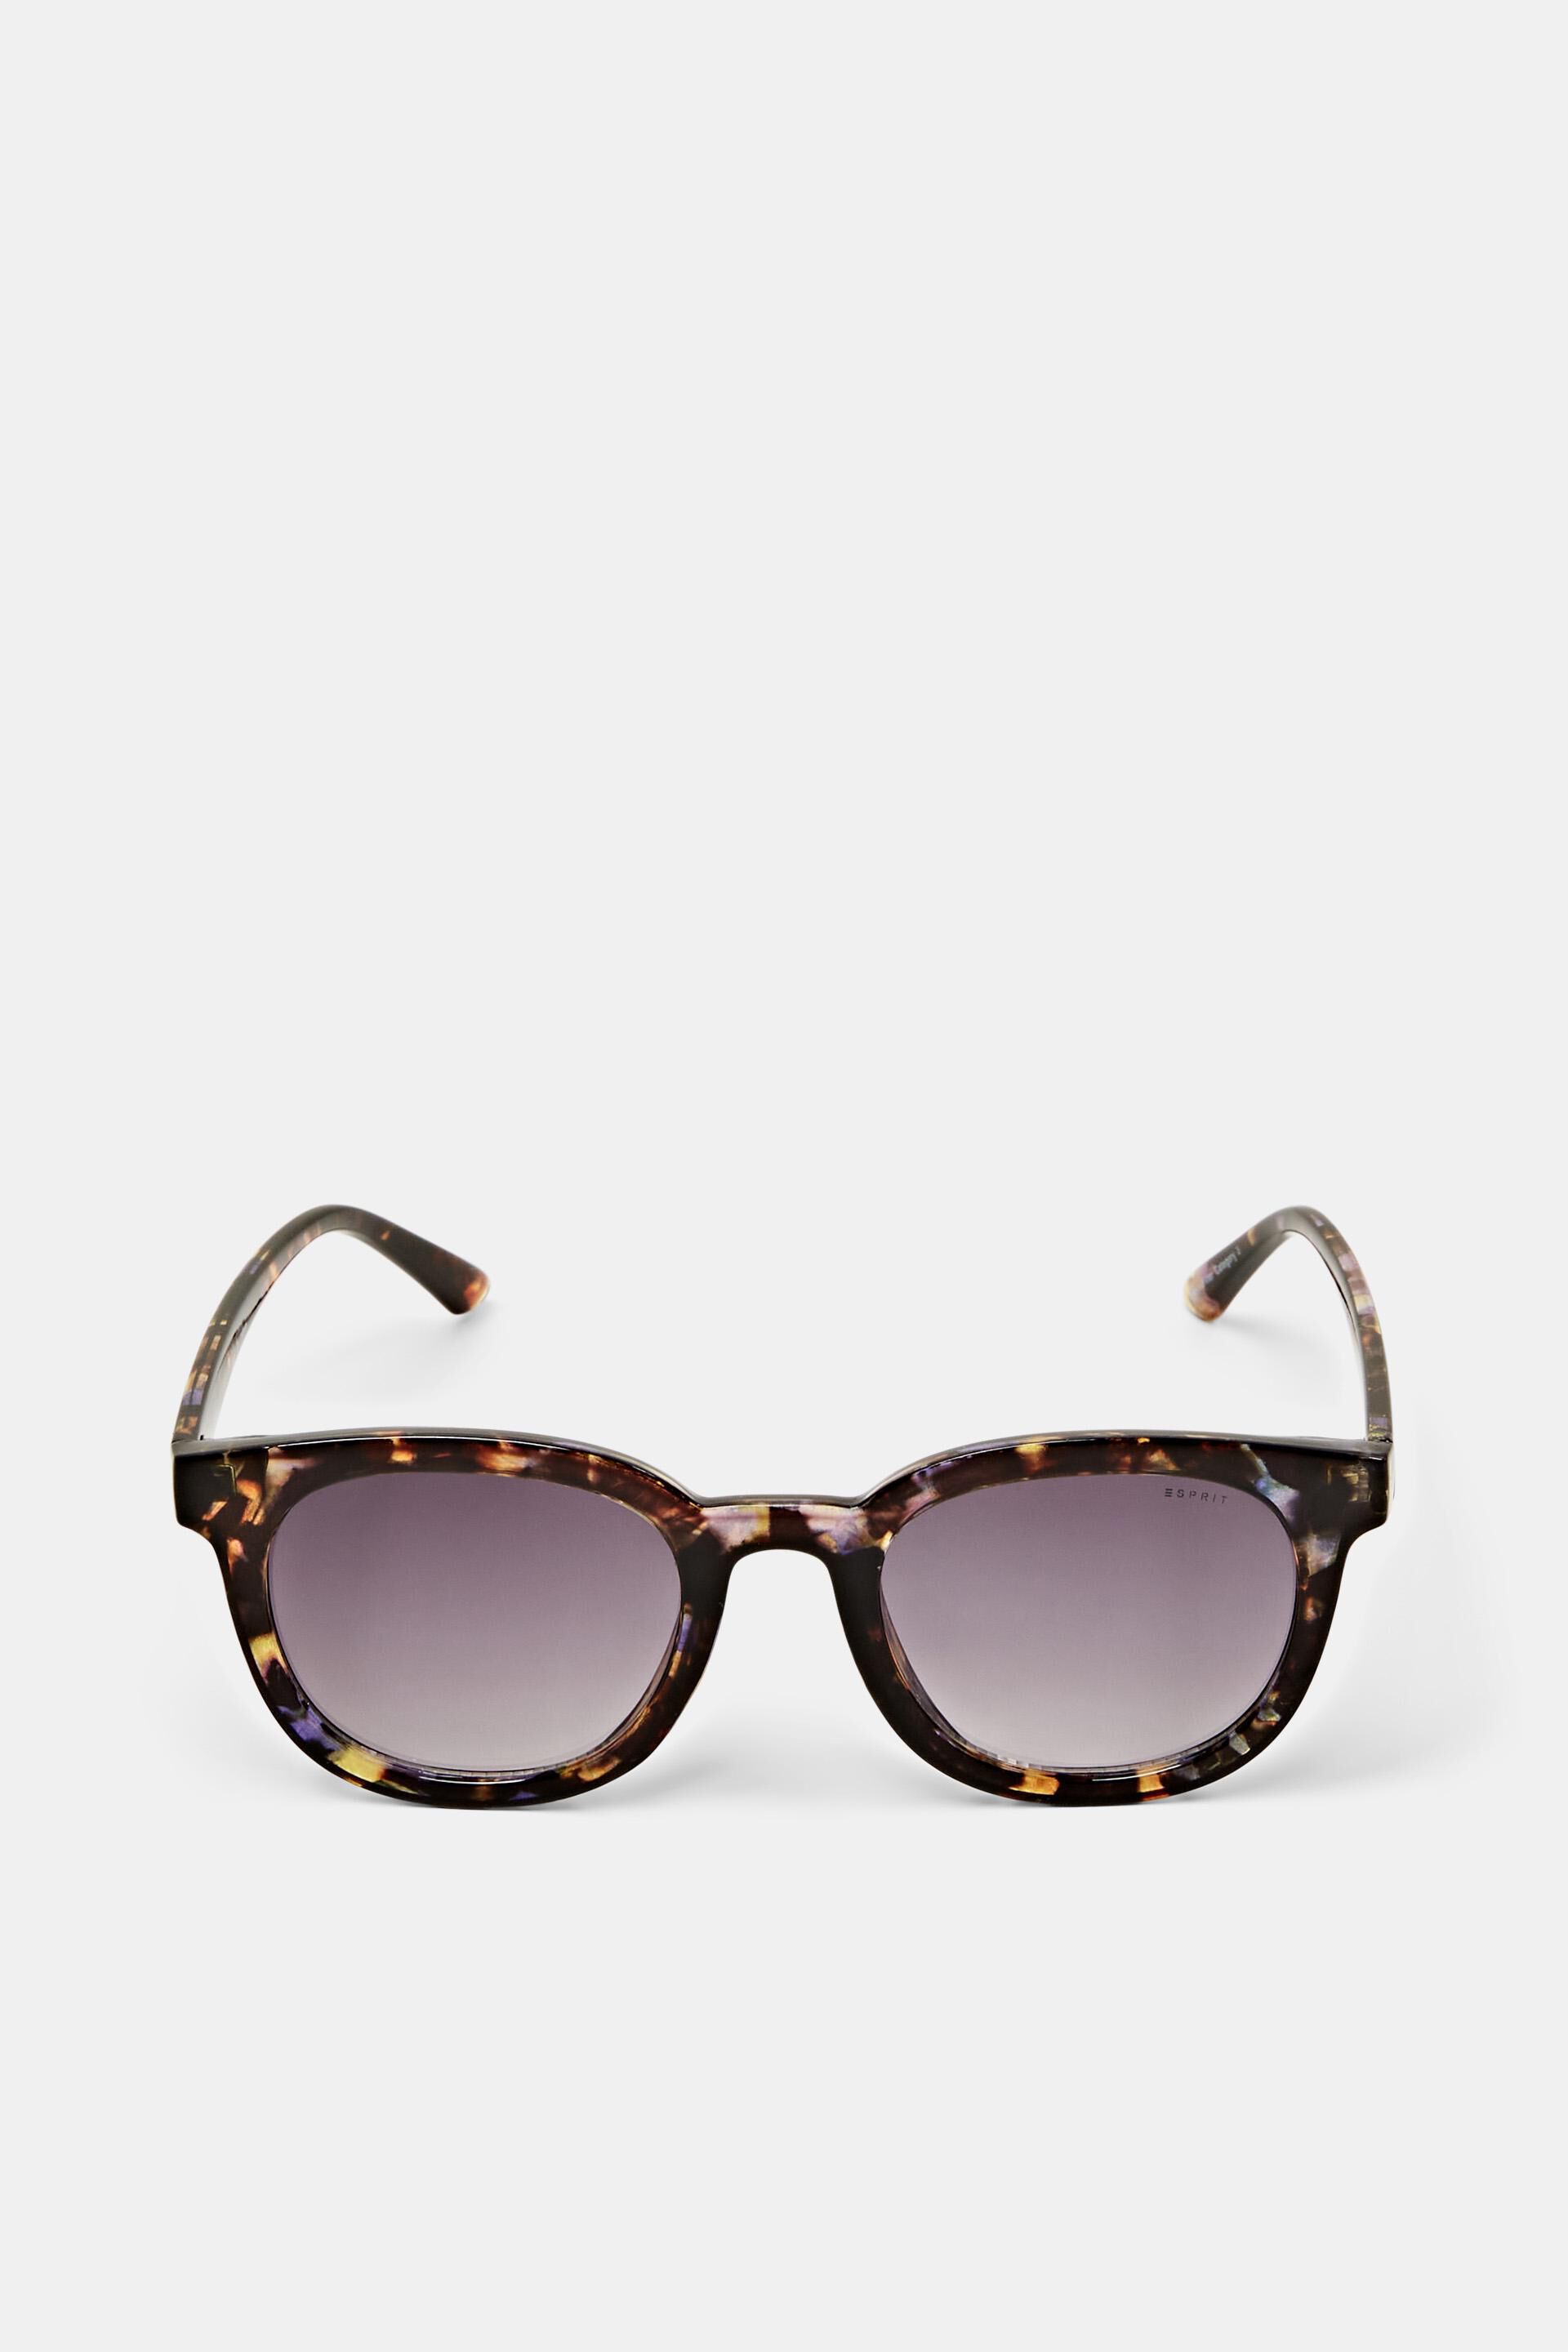 Esprit framed Round sunglasses